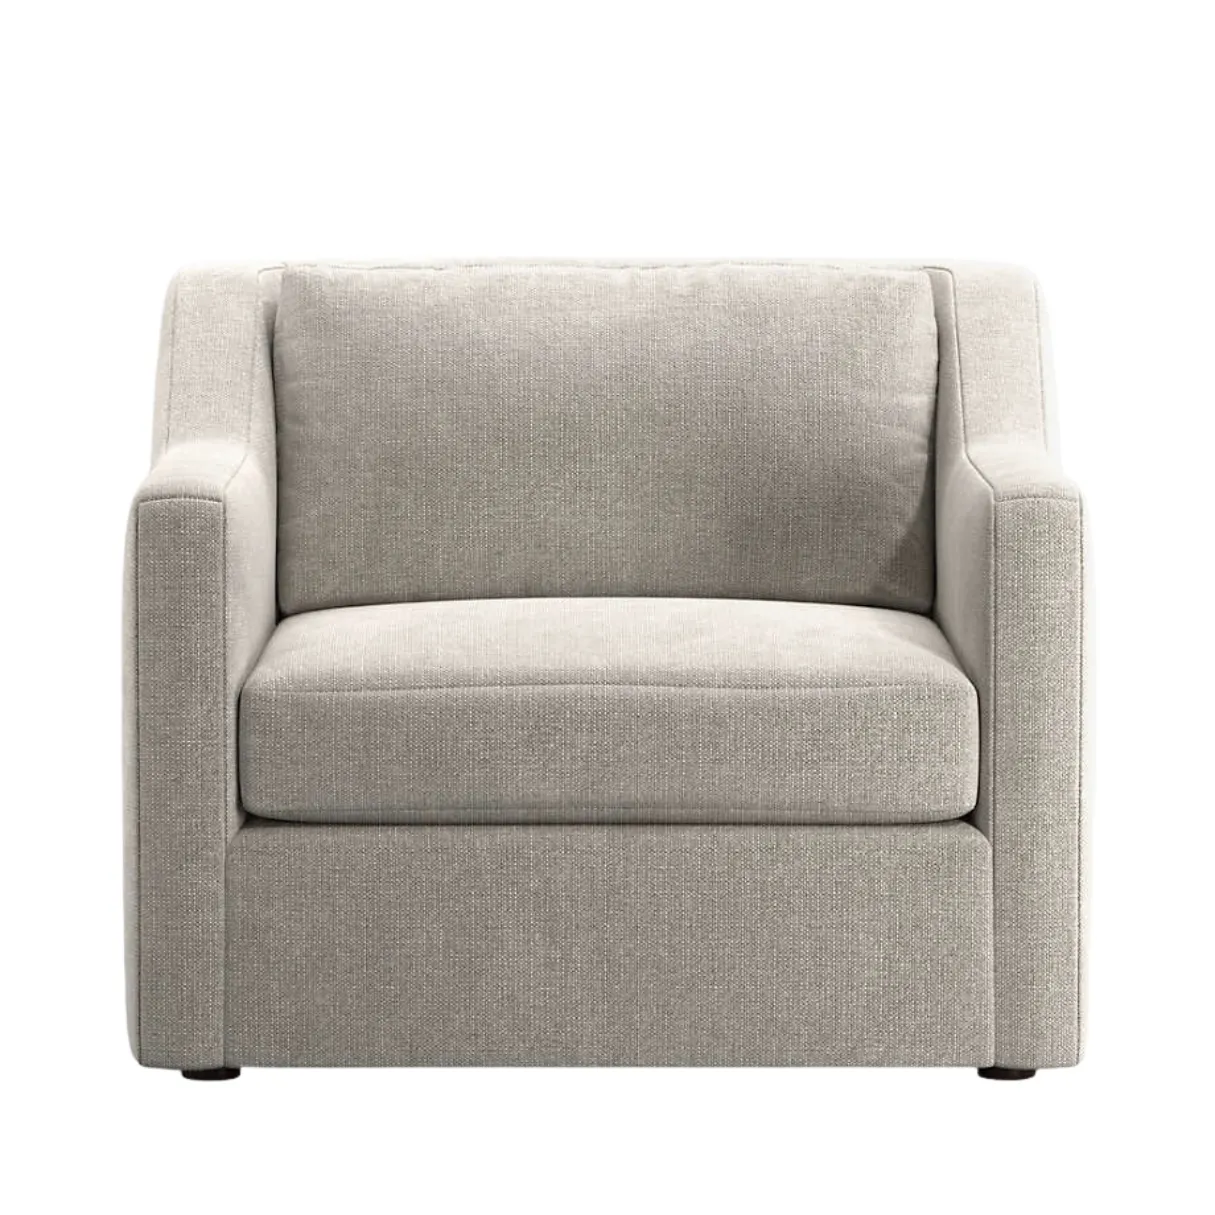 Harga pabrik langsung dari kayu poliester kursi kain & ruang tamu aksen kursi Sofa tunggal